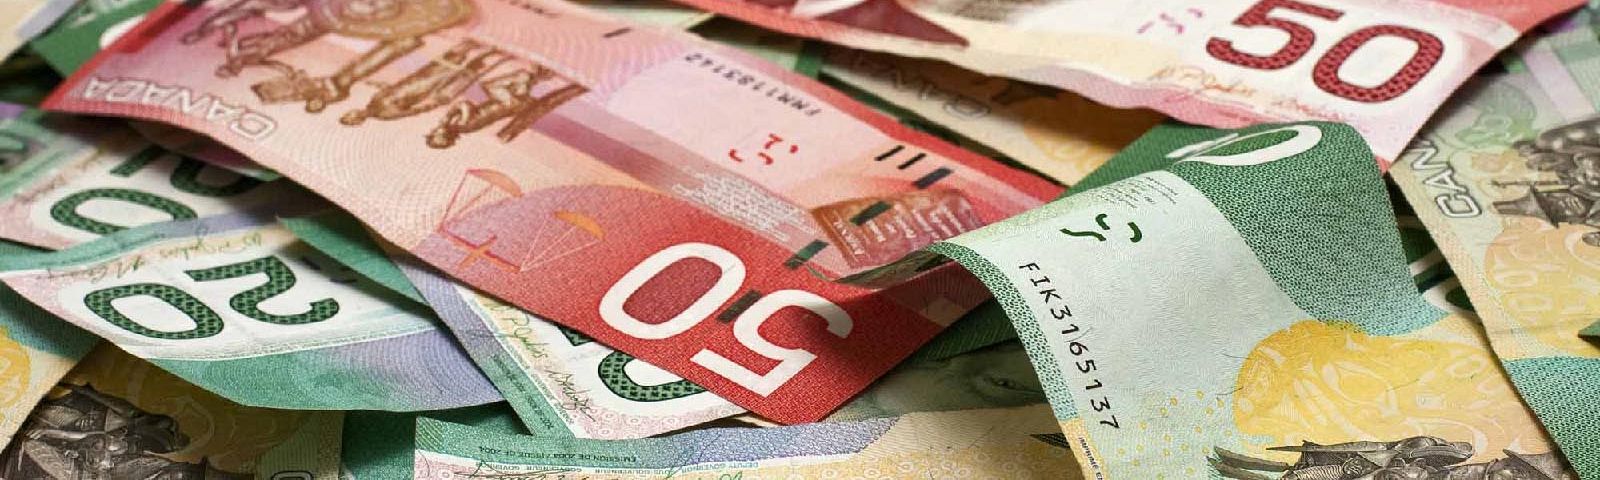 Canadian dollar keeps to narrow range as oil rally fades